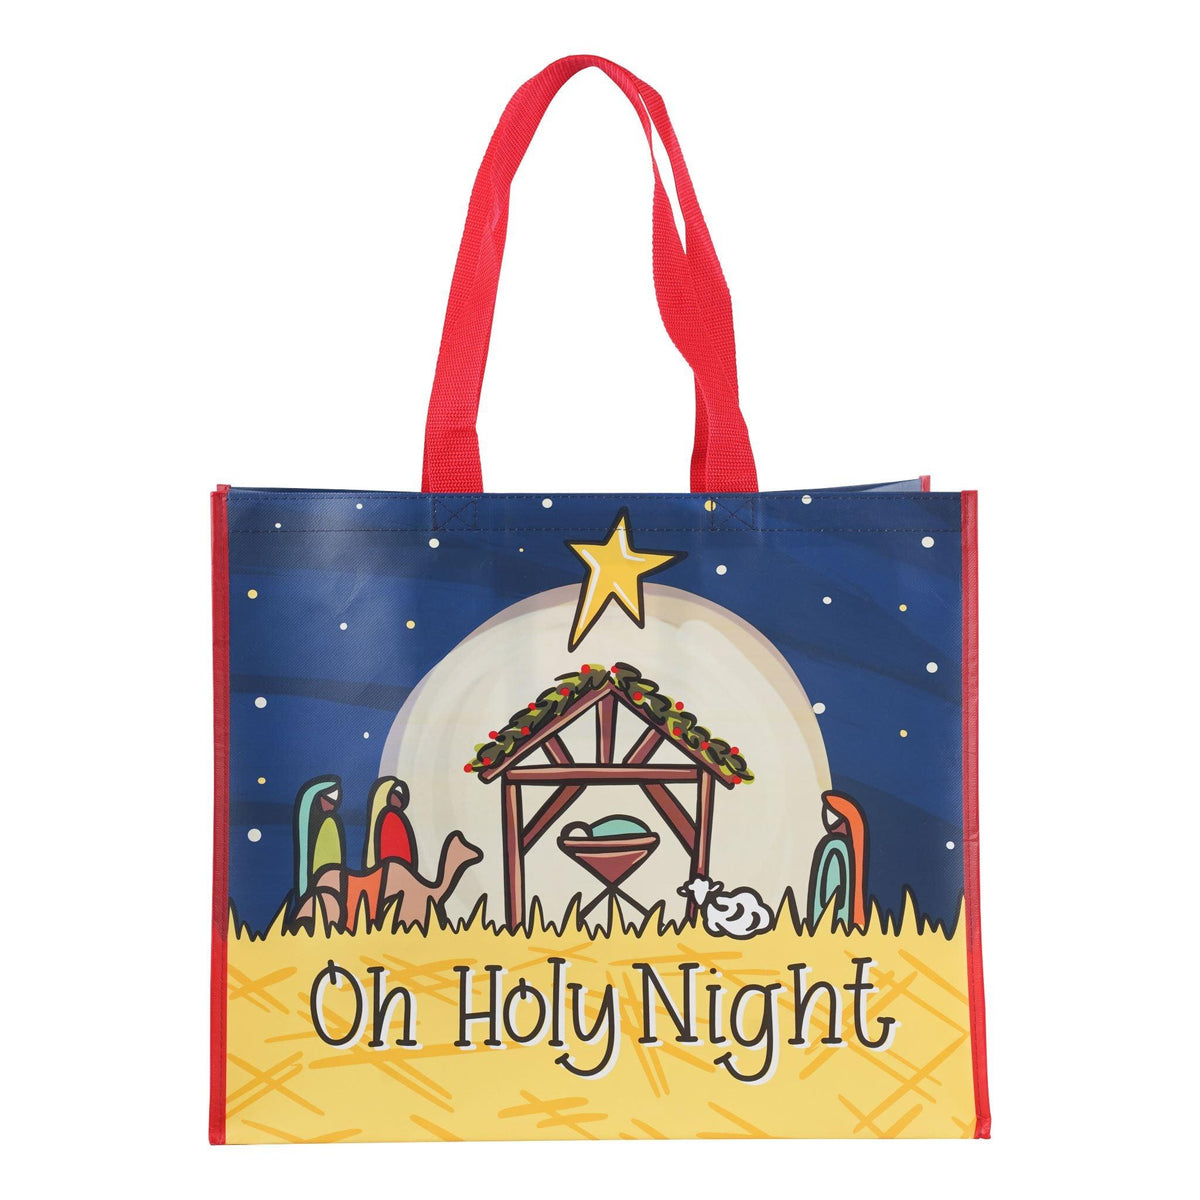 Oh Holy Night Tote Bag - GLORY HAUS 